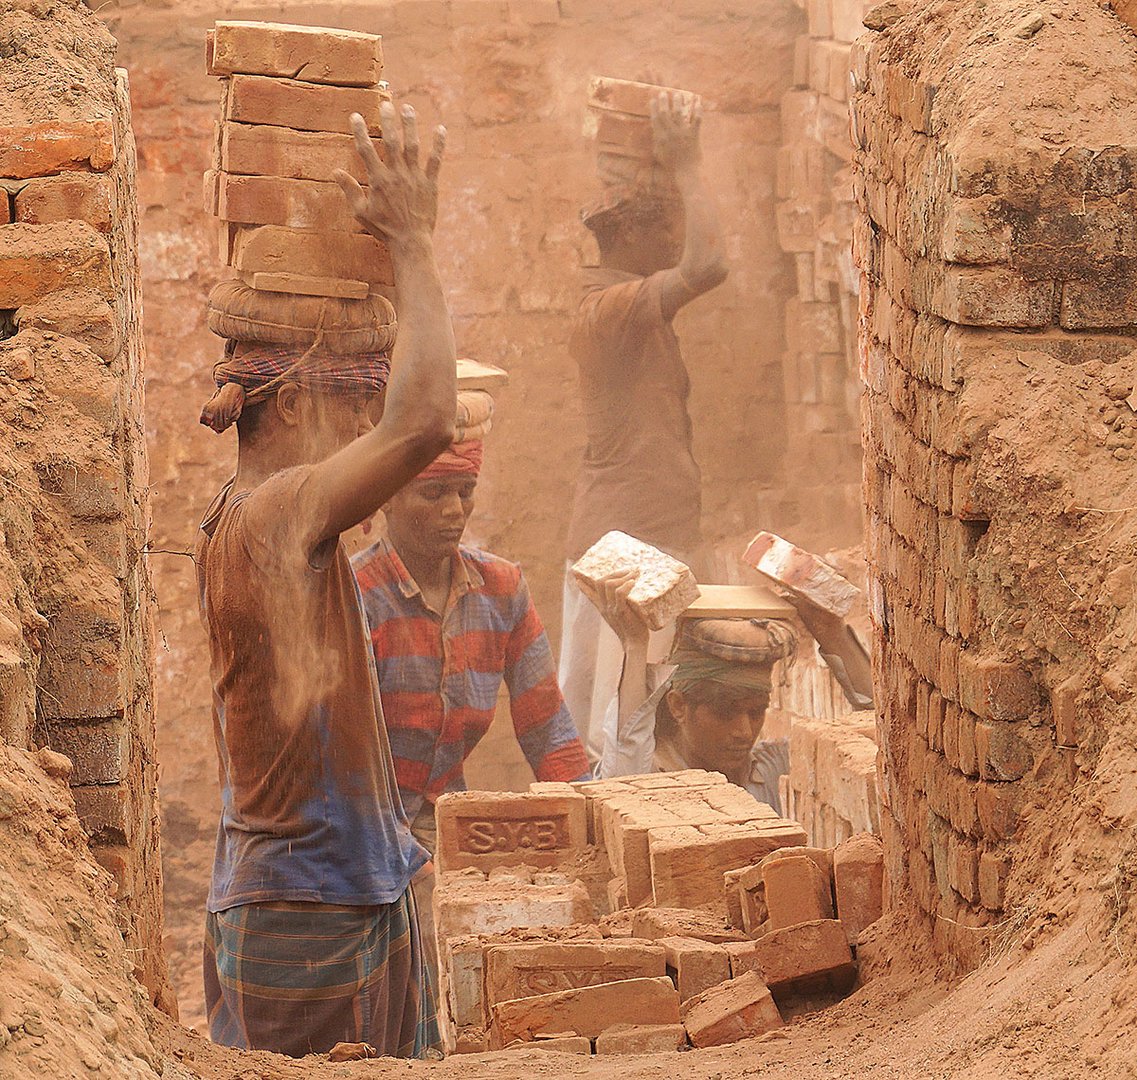 Living Among Bricks - Bangladesh, Dahka by Saro Di Bartolo